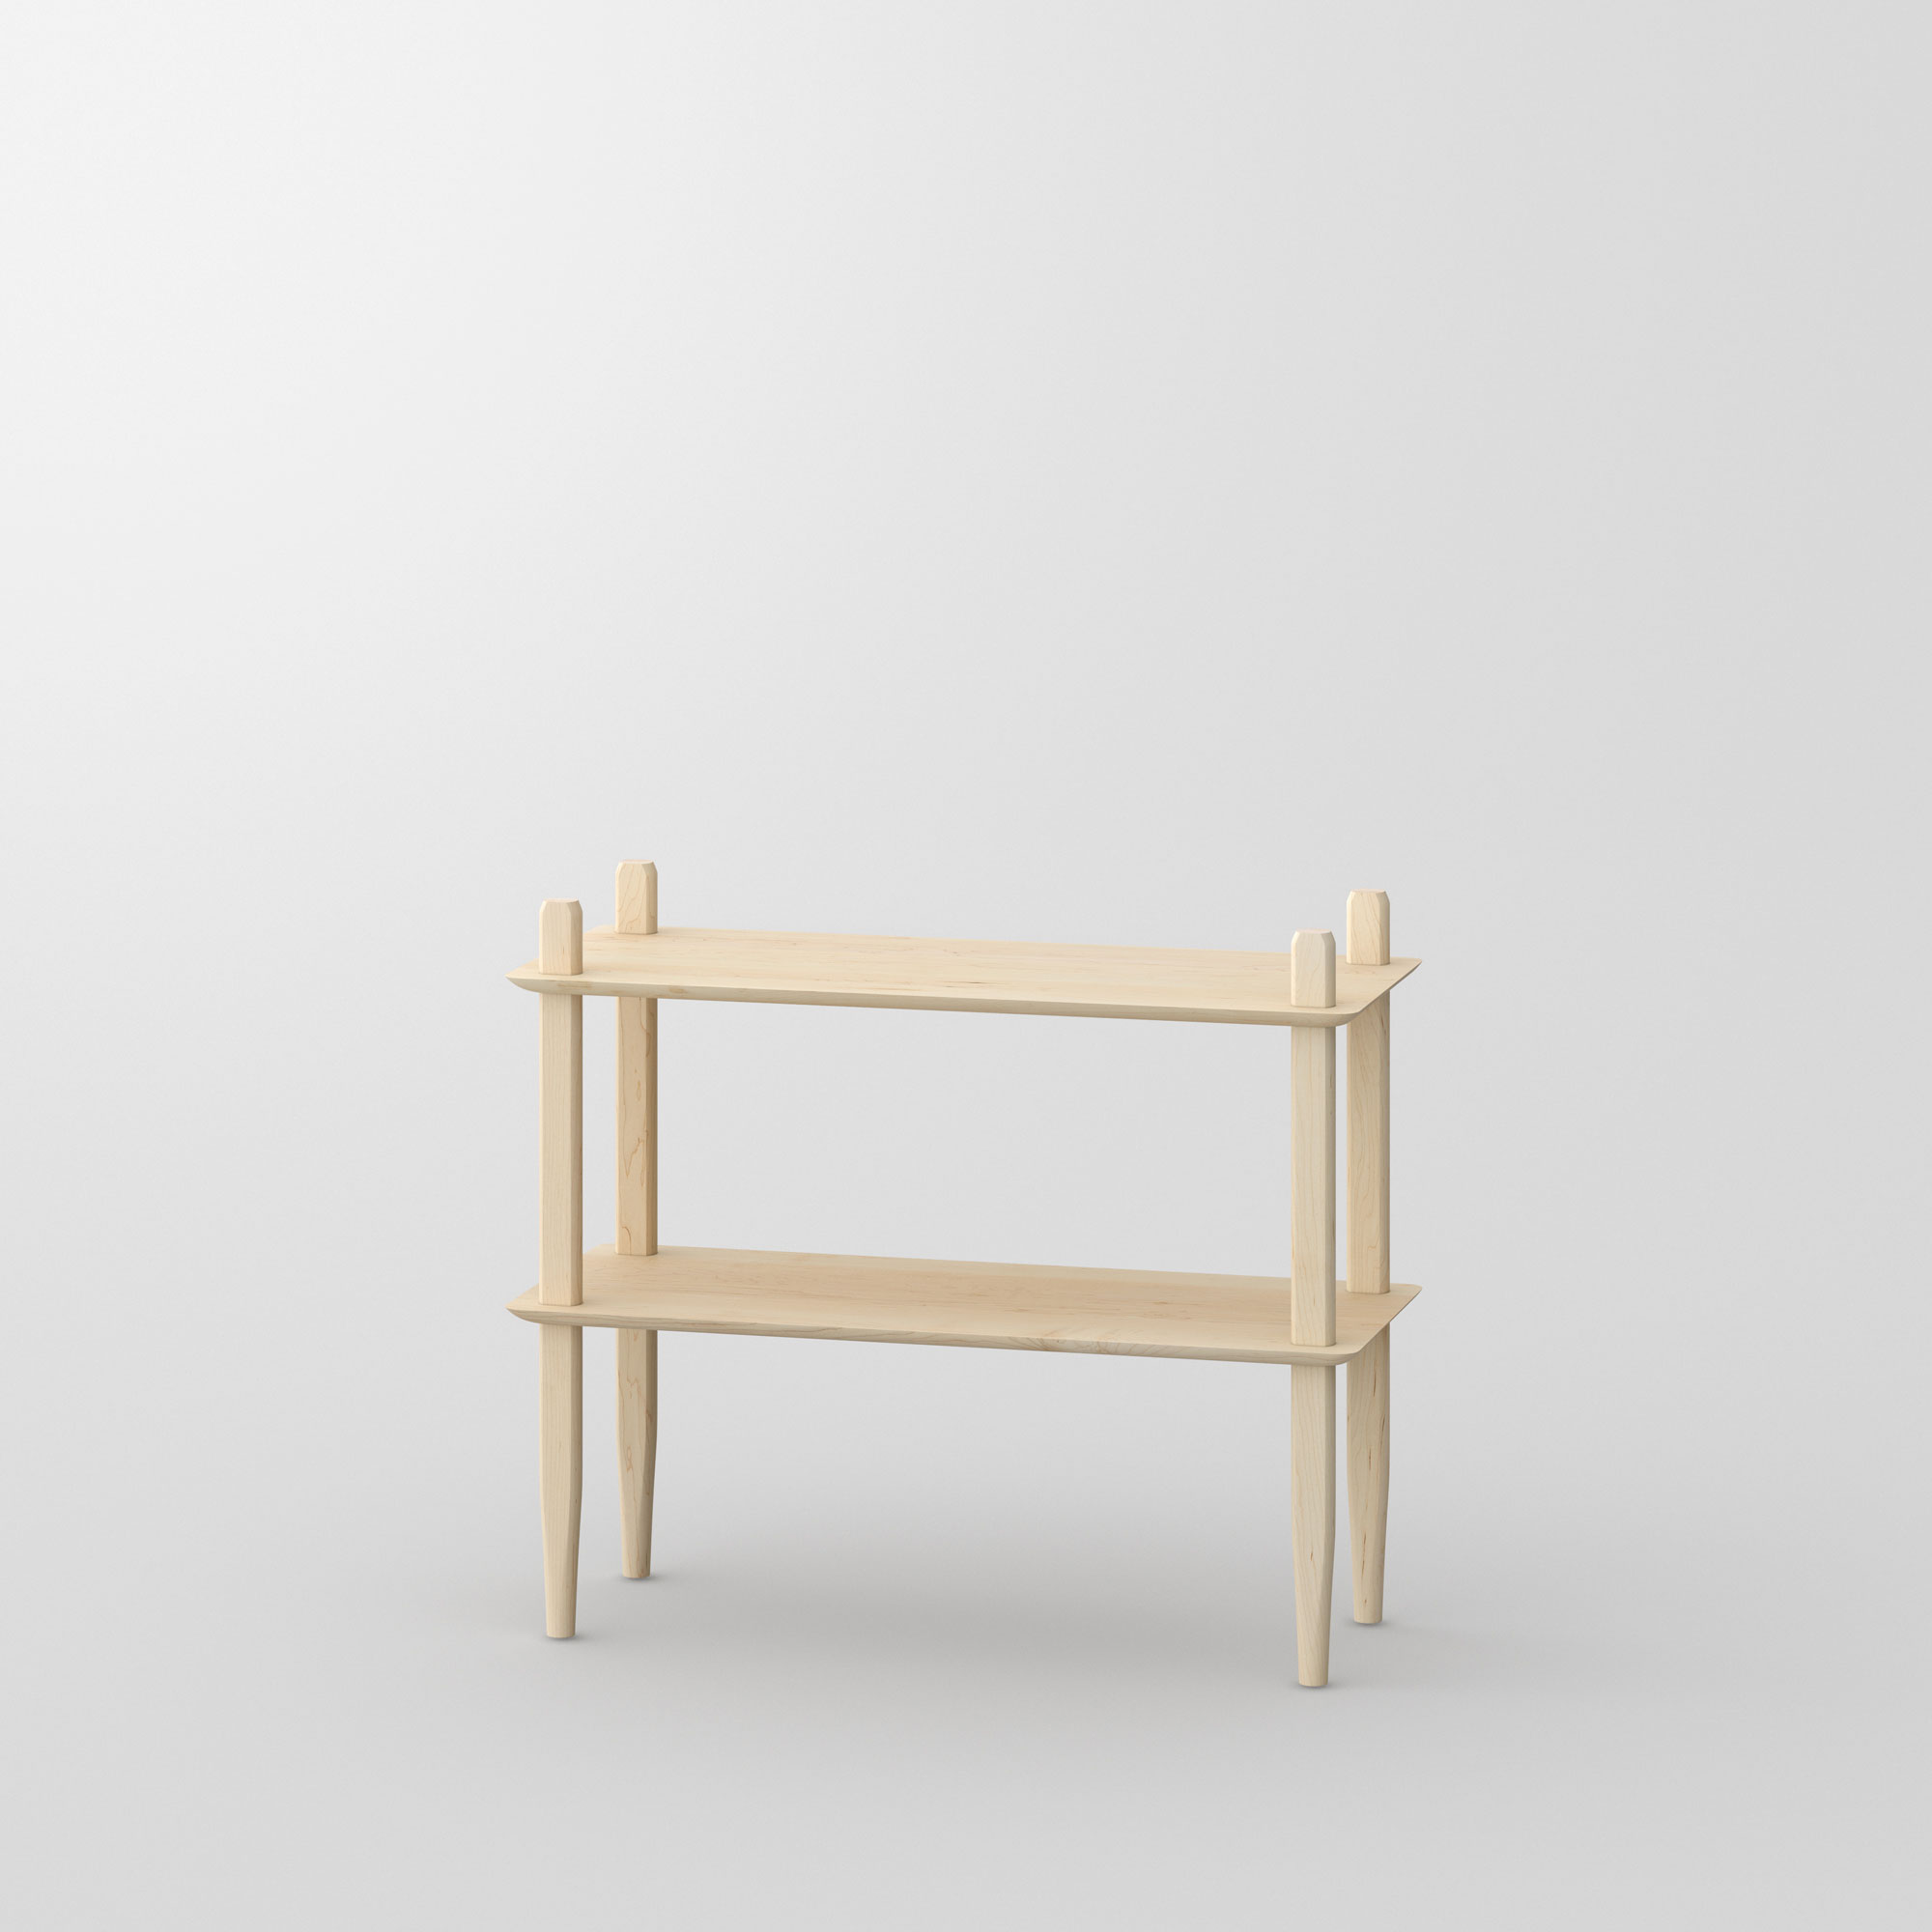 Design Shelf AETAS vitamin-design custom made in solid wood by vitamin design